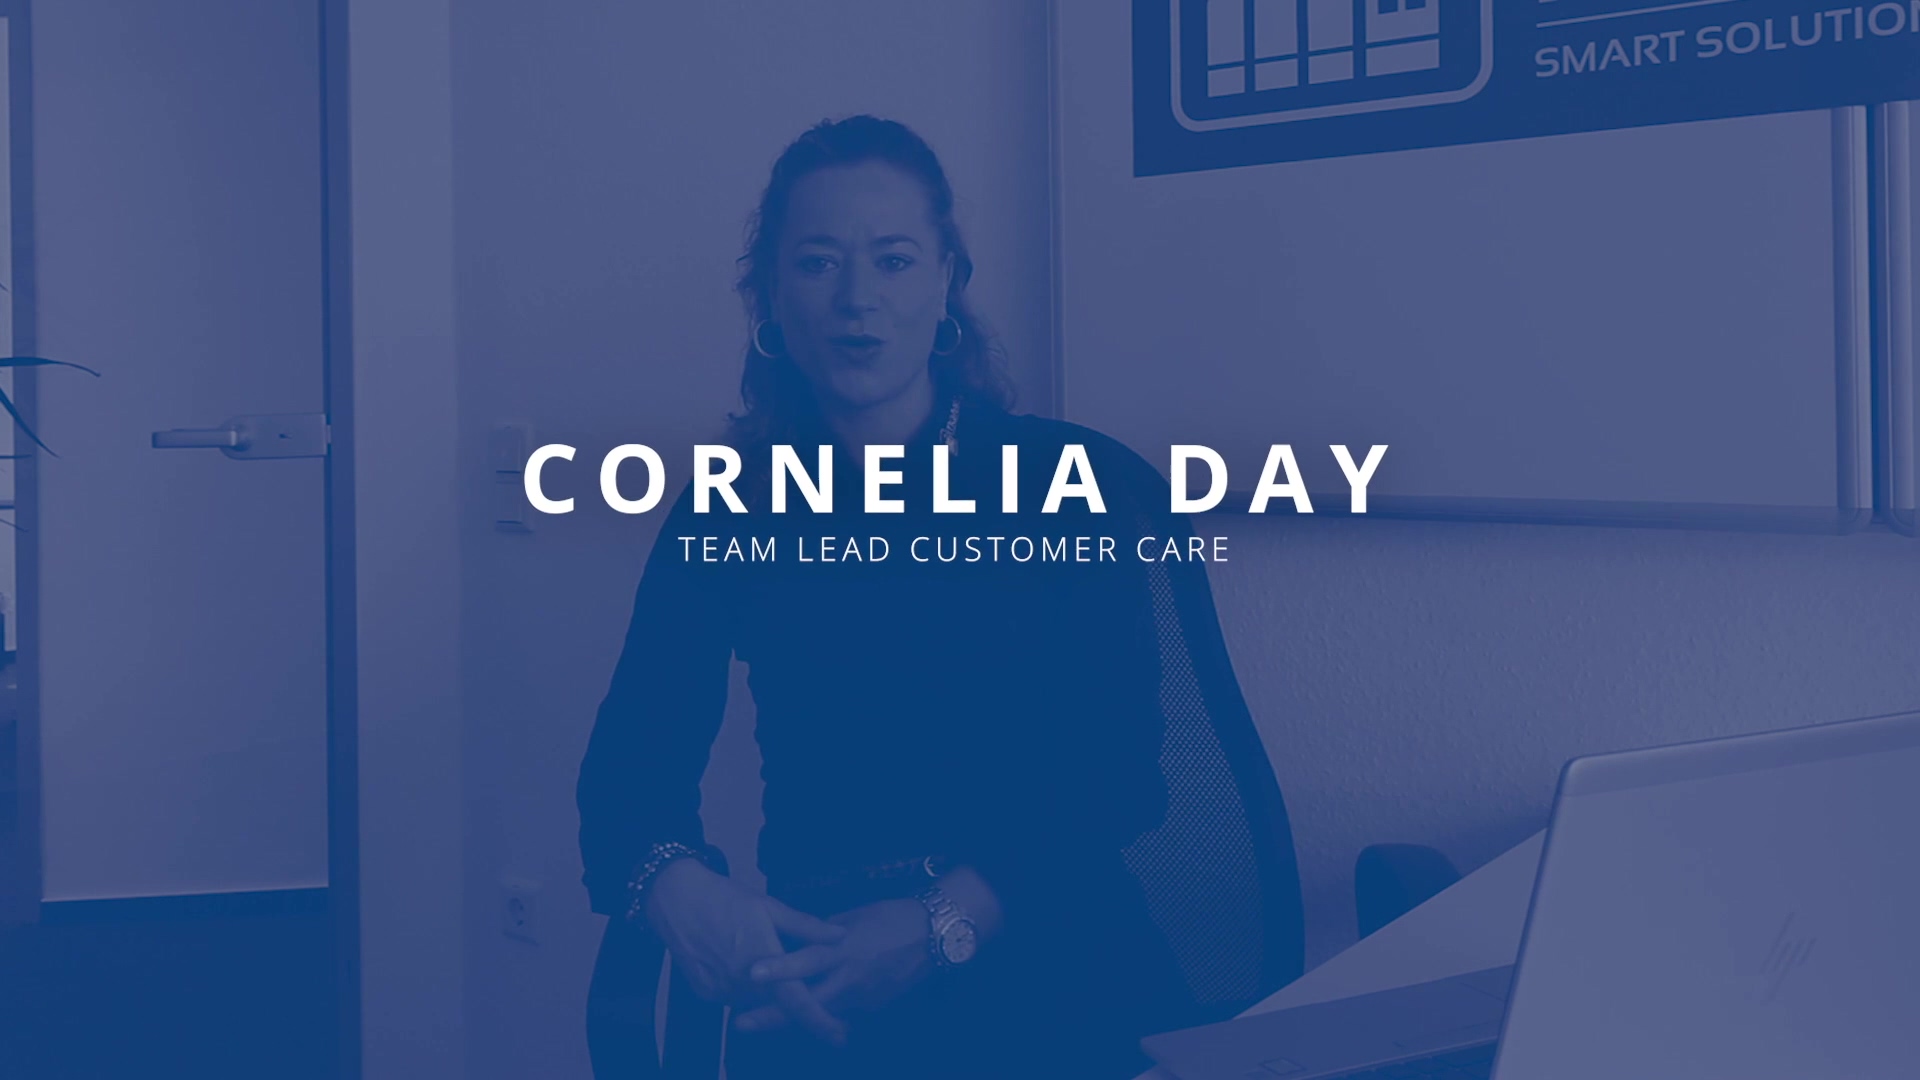 Cornelia Mitarbeiterinterview_finale2.0